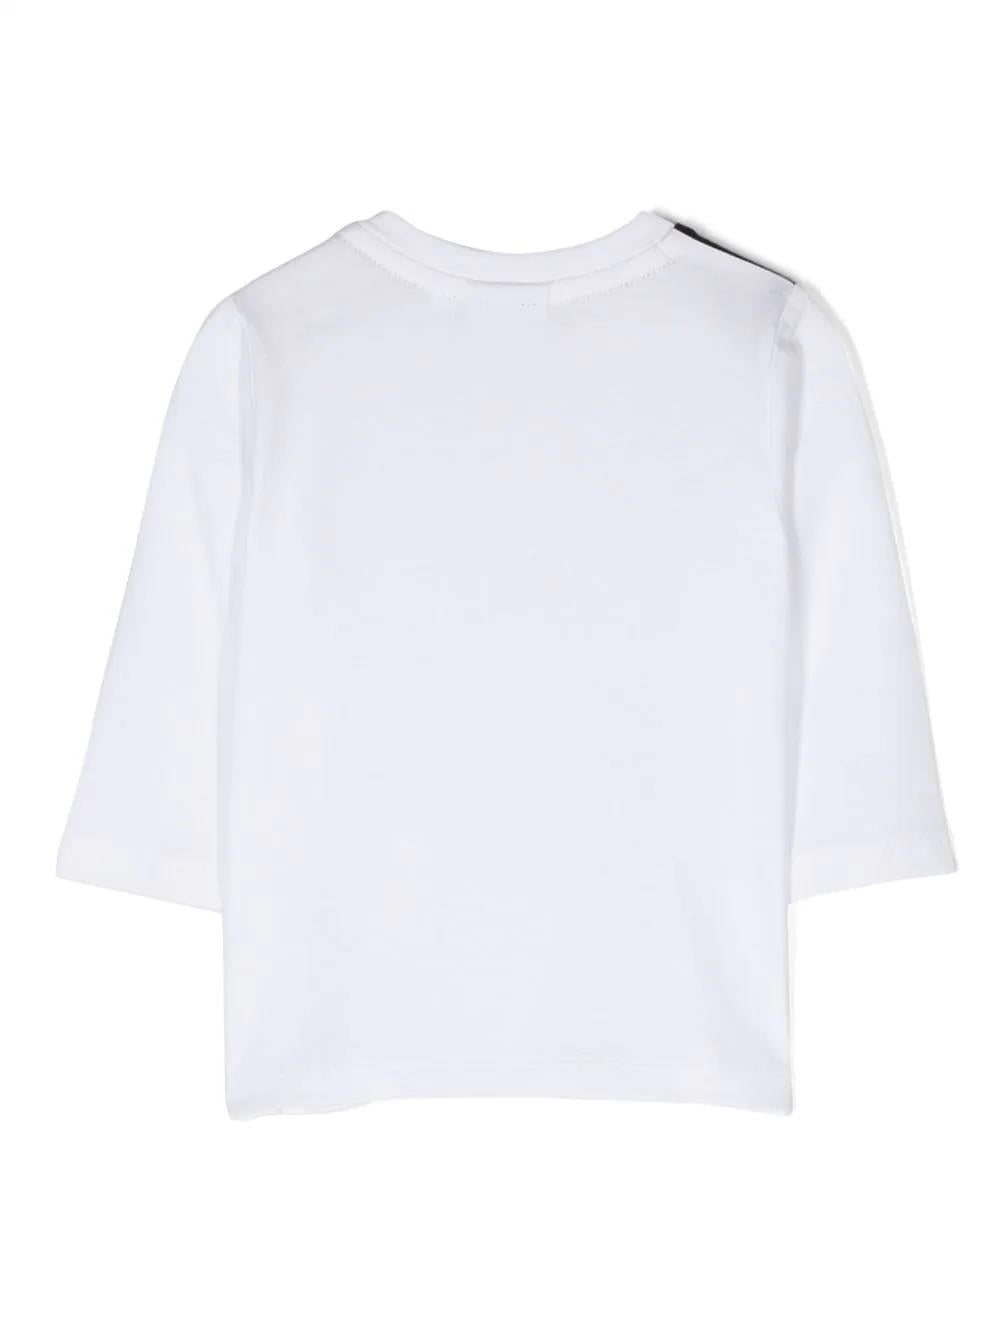 White cotton jersey baby boy HUGO BOSS t-shirt | Carofiglio Junior